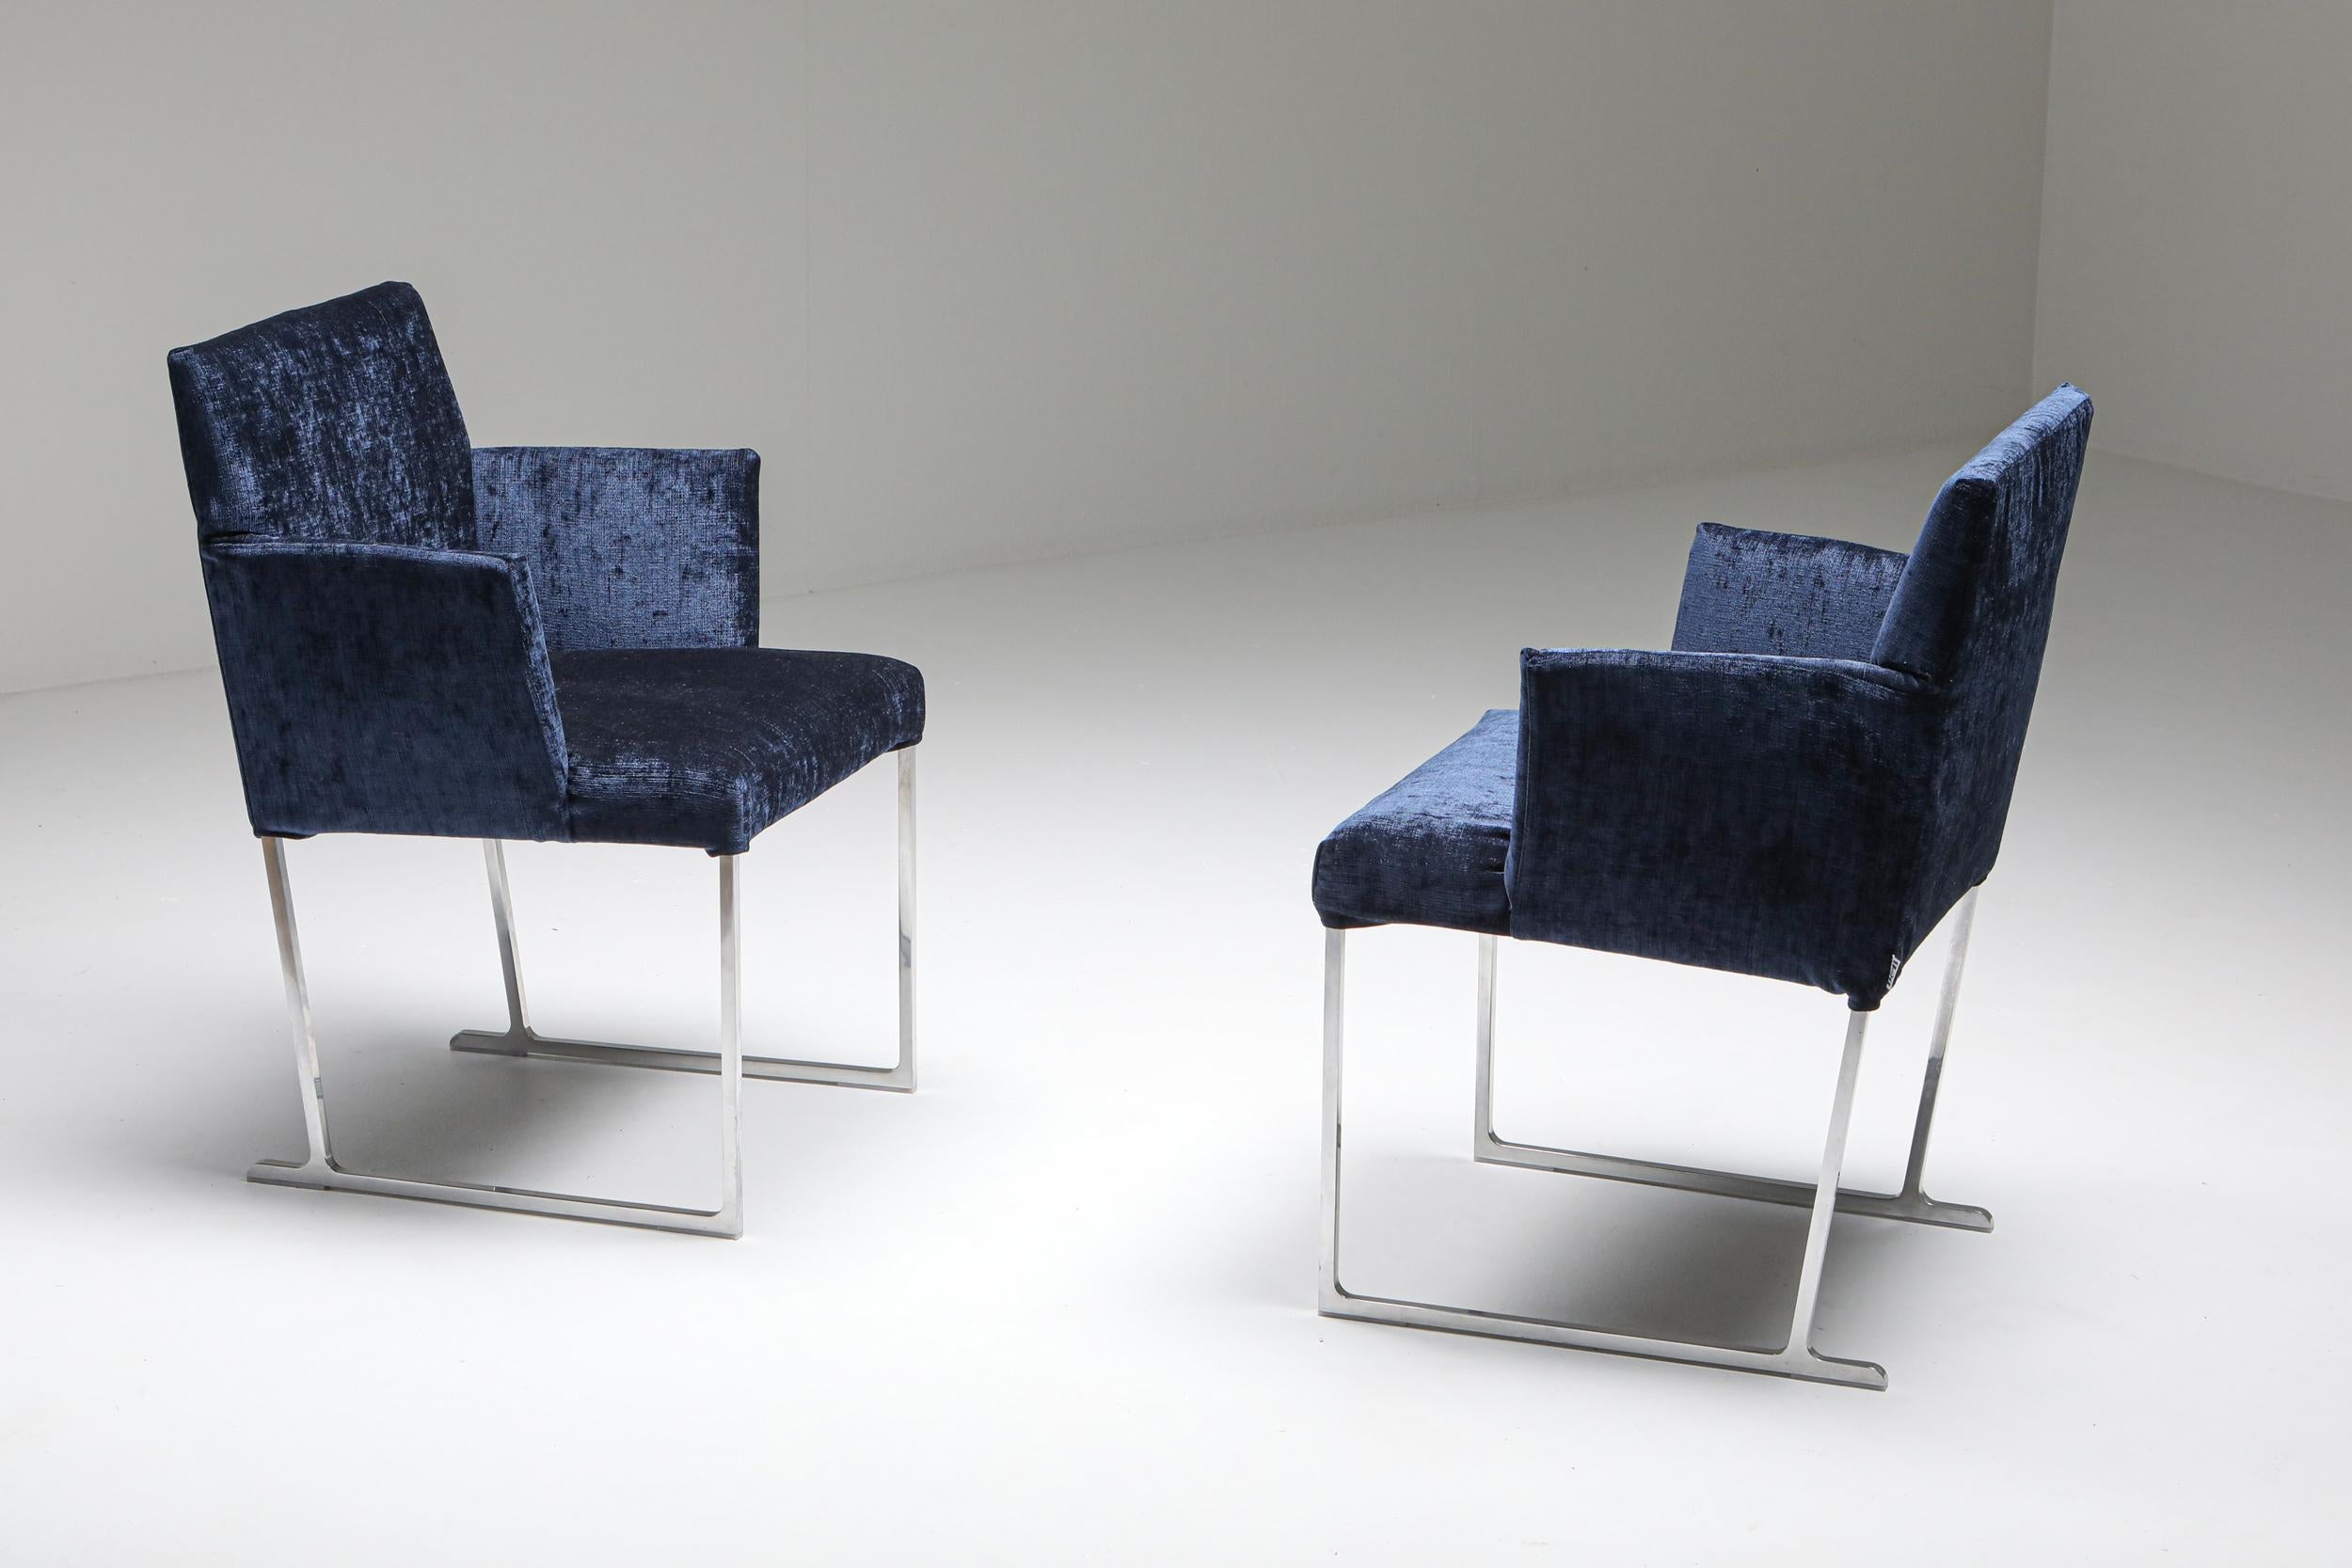 Velvet Solo Chairs by Antonio Citterio for Maxalto